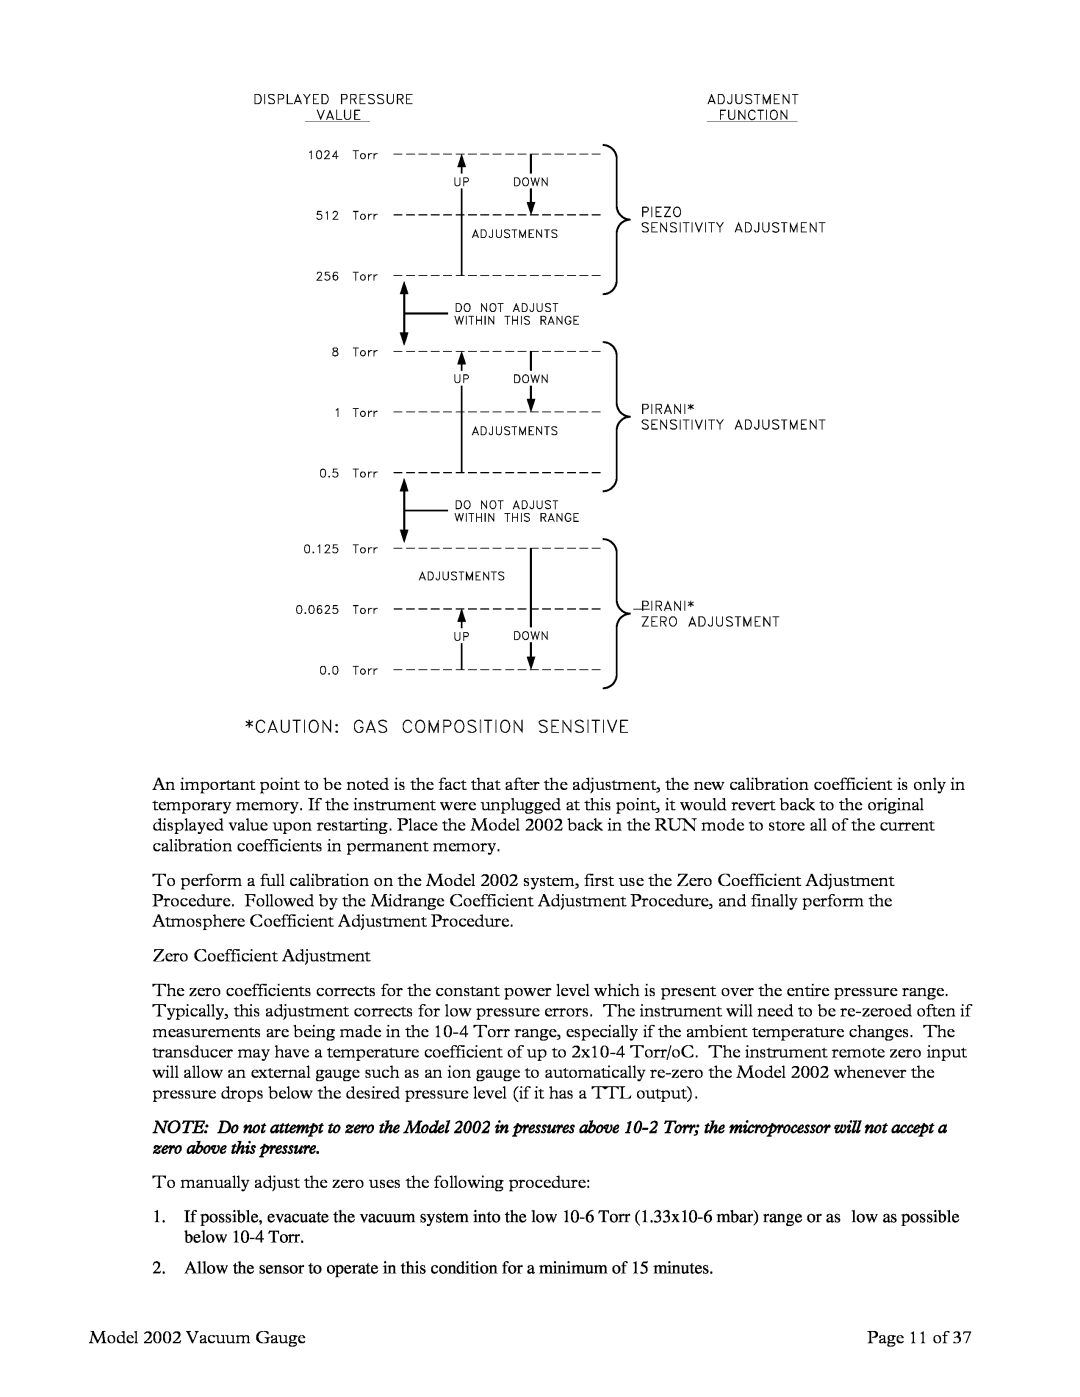 Teledyne 2002 instruction manual Zero Coefficient Adjustment 